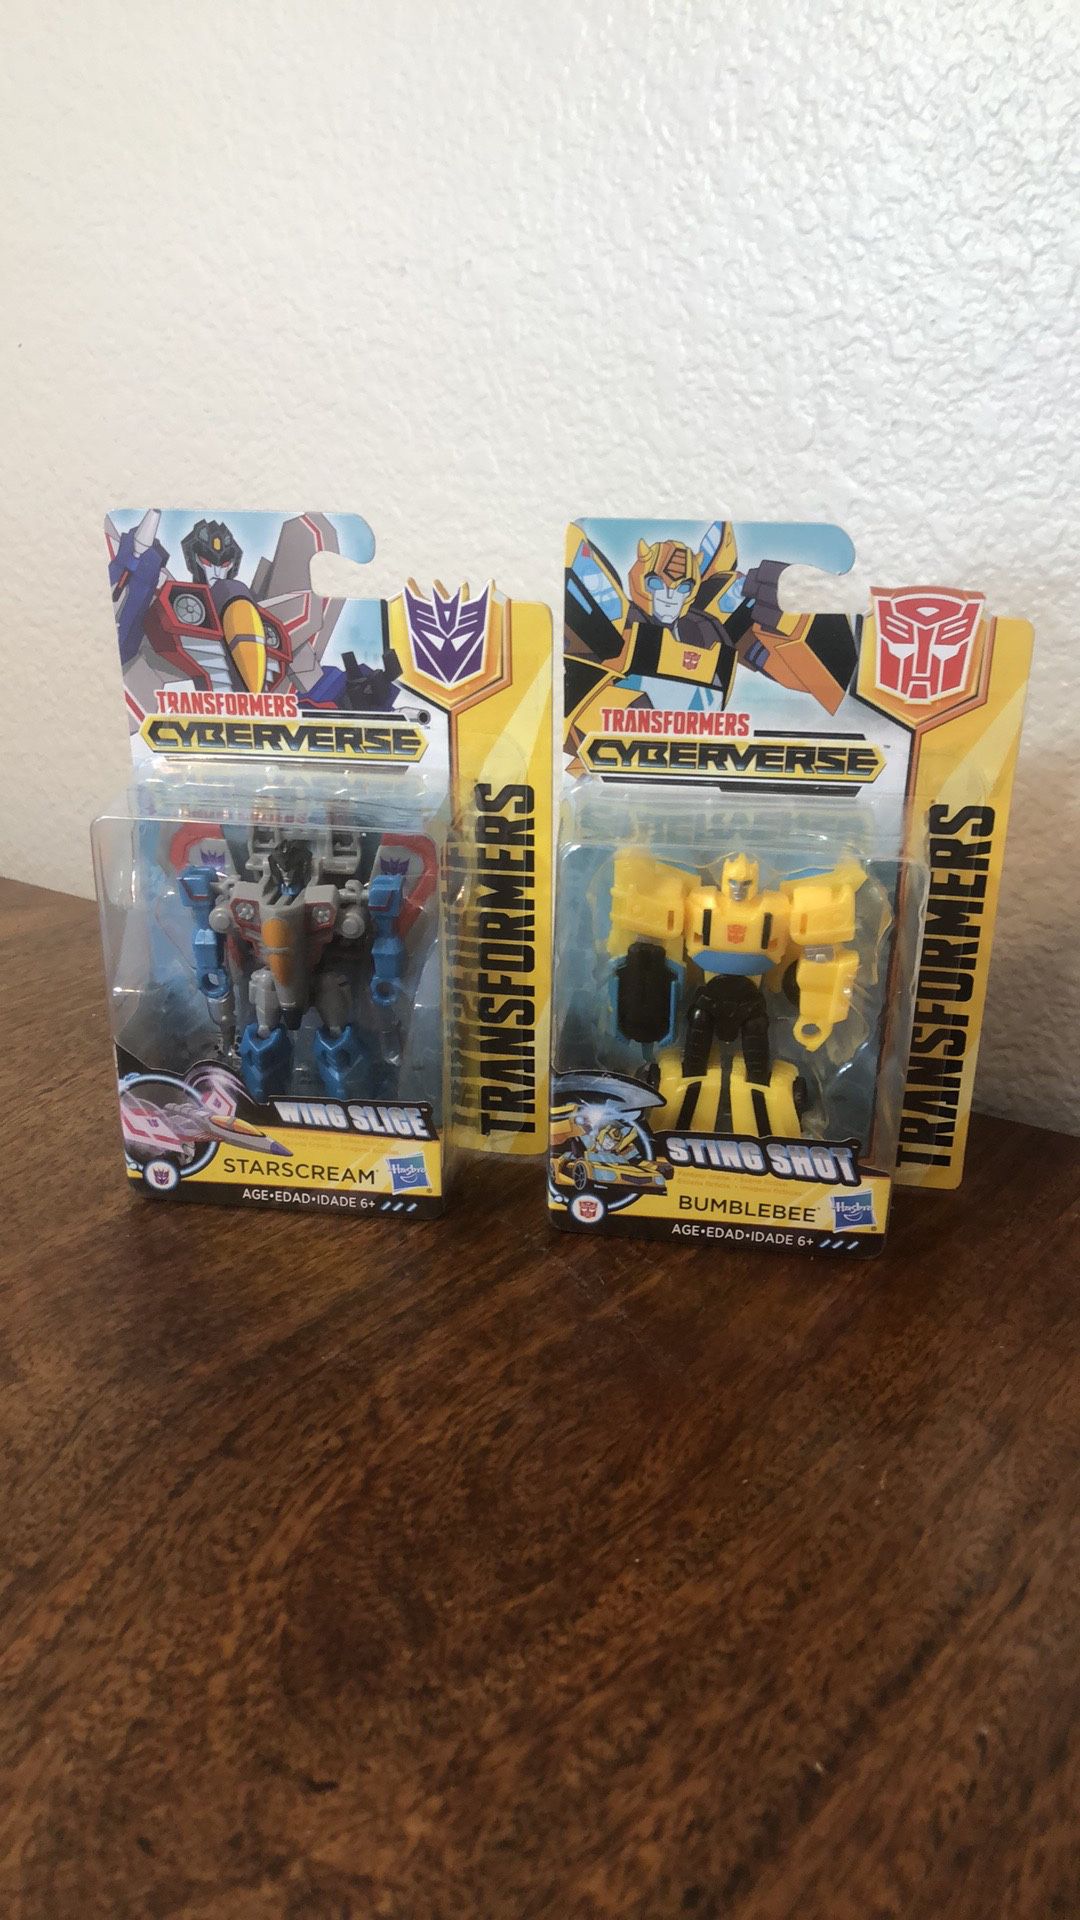 Hasbro Transformers Cyberverse Sting Shot BUMBLEBEE - New in Box! Hasbro Transformers Cyberverse Wing Slice Starscream Action Figure New